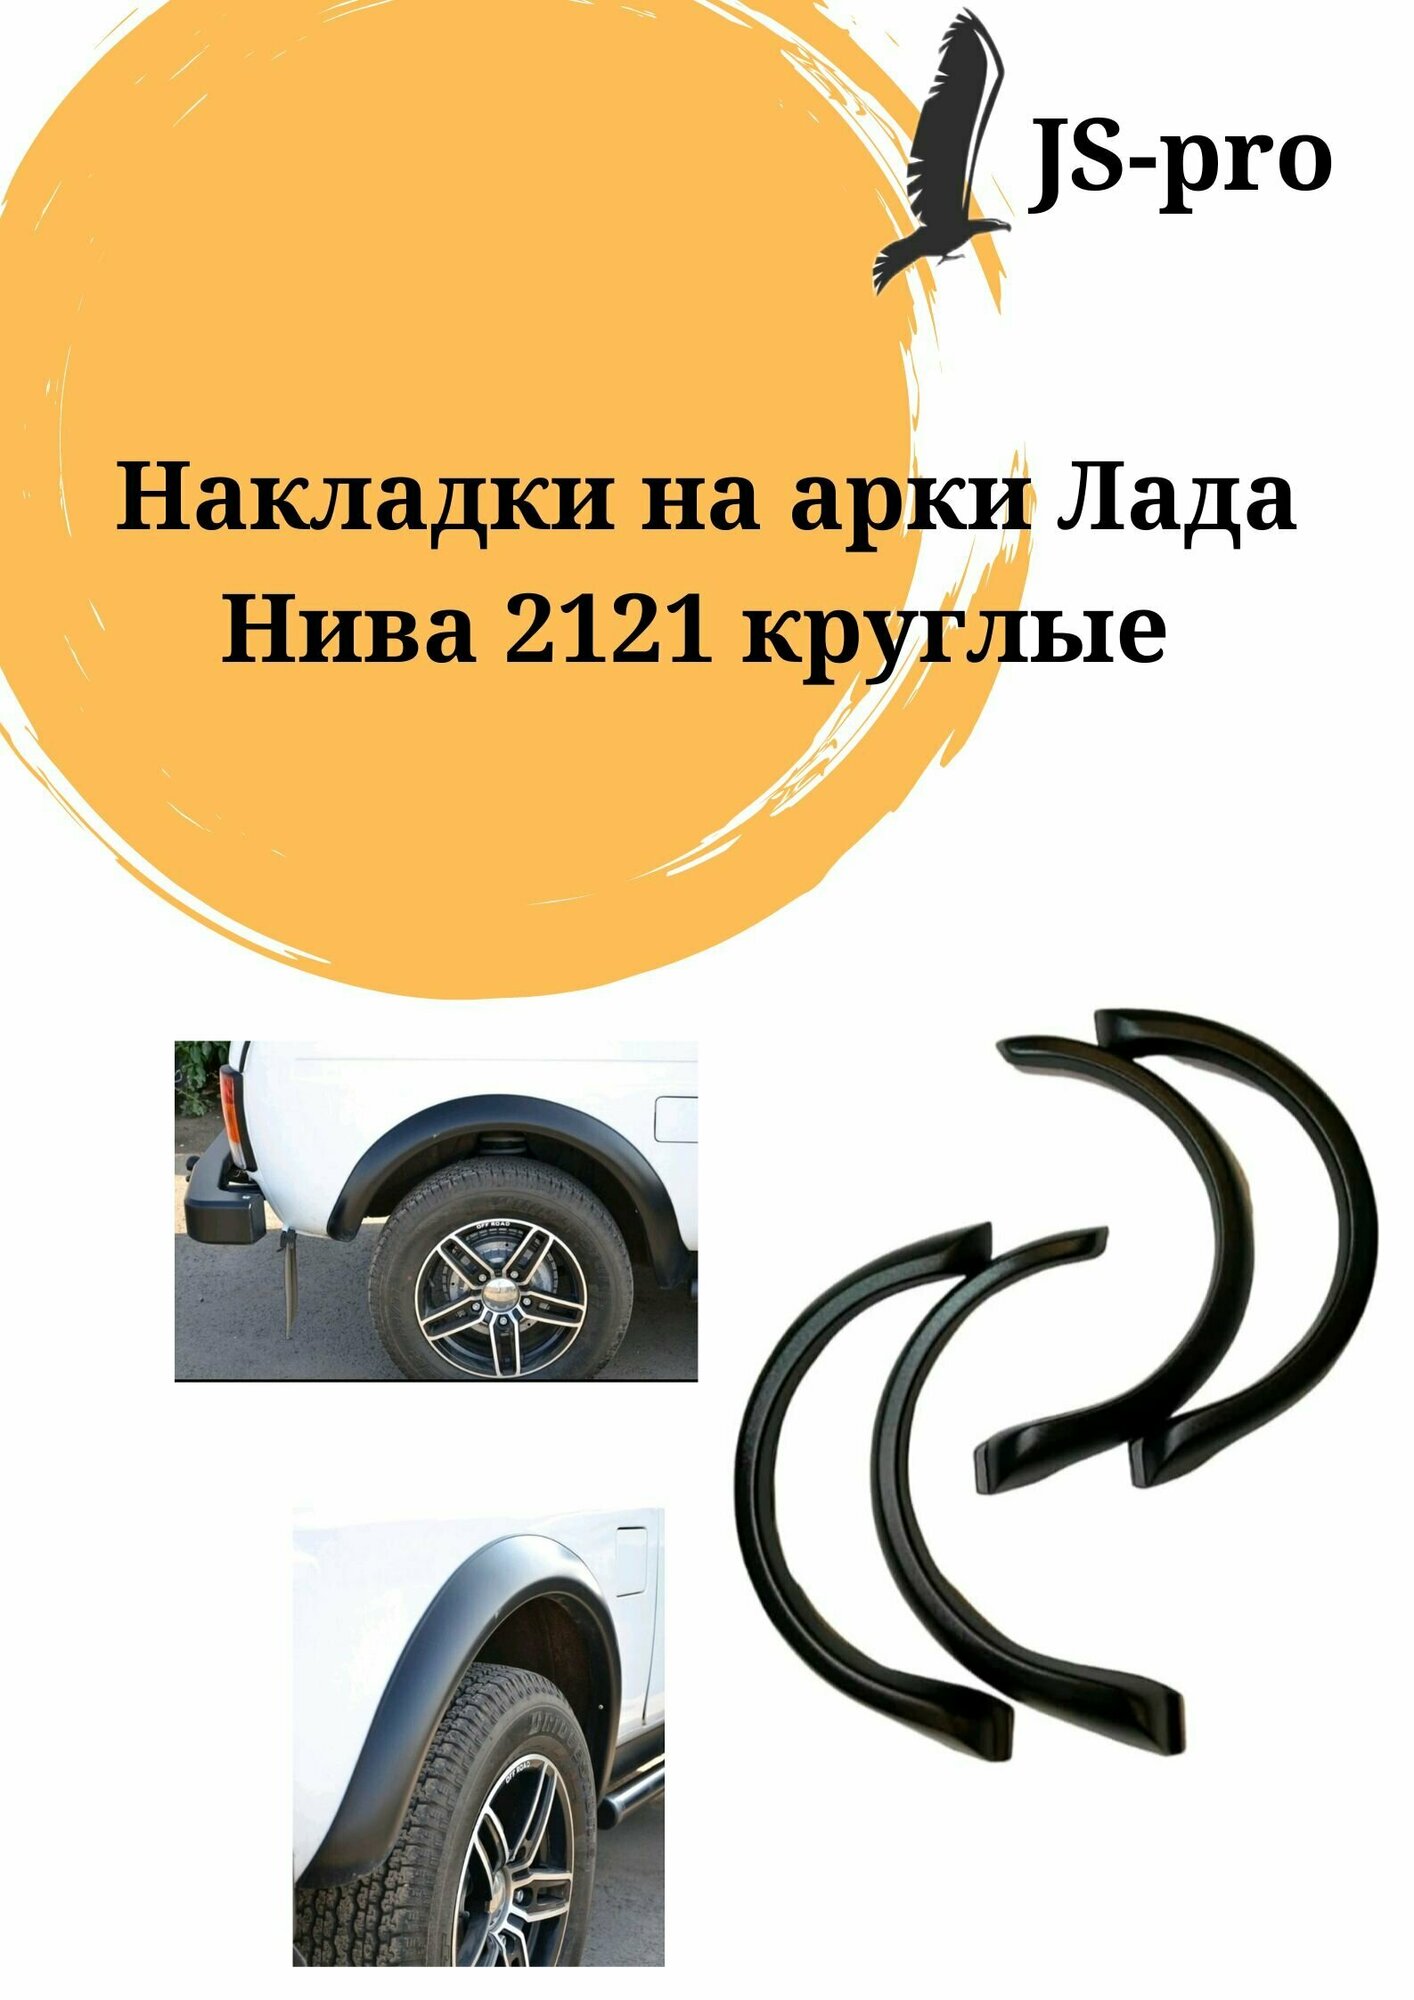 Накладки на арки Лада Нива 2121 круглые с резиновым уплотнителем